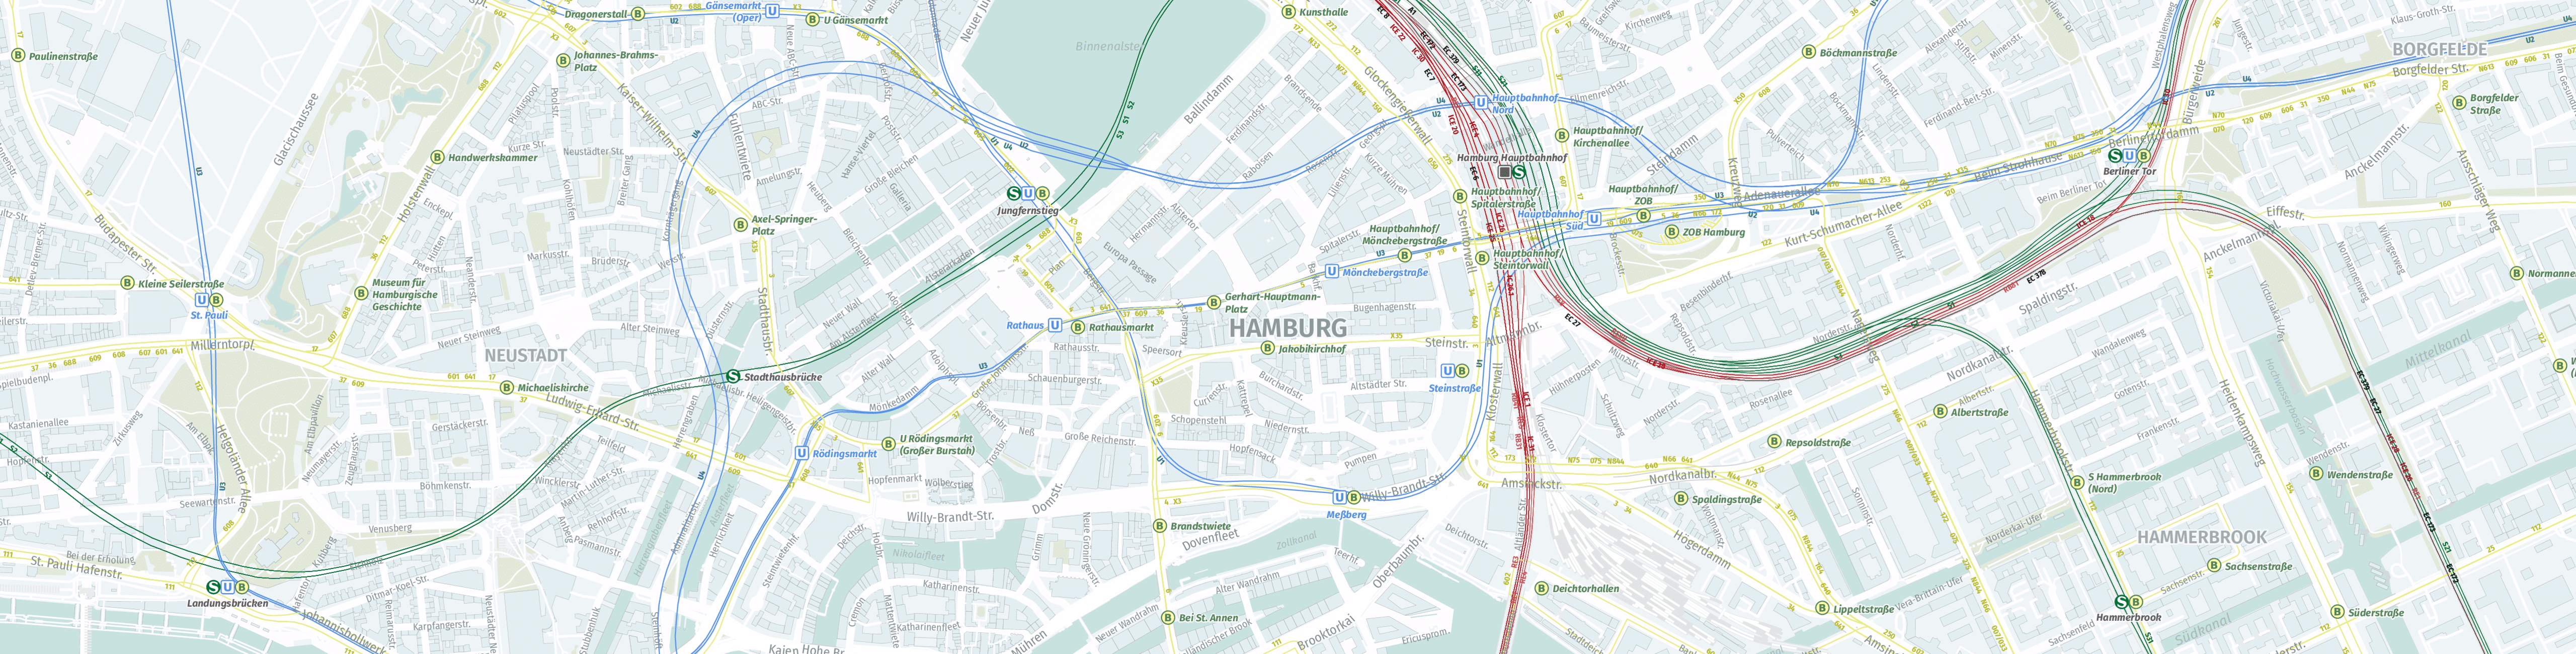 public transport map vector PDF download